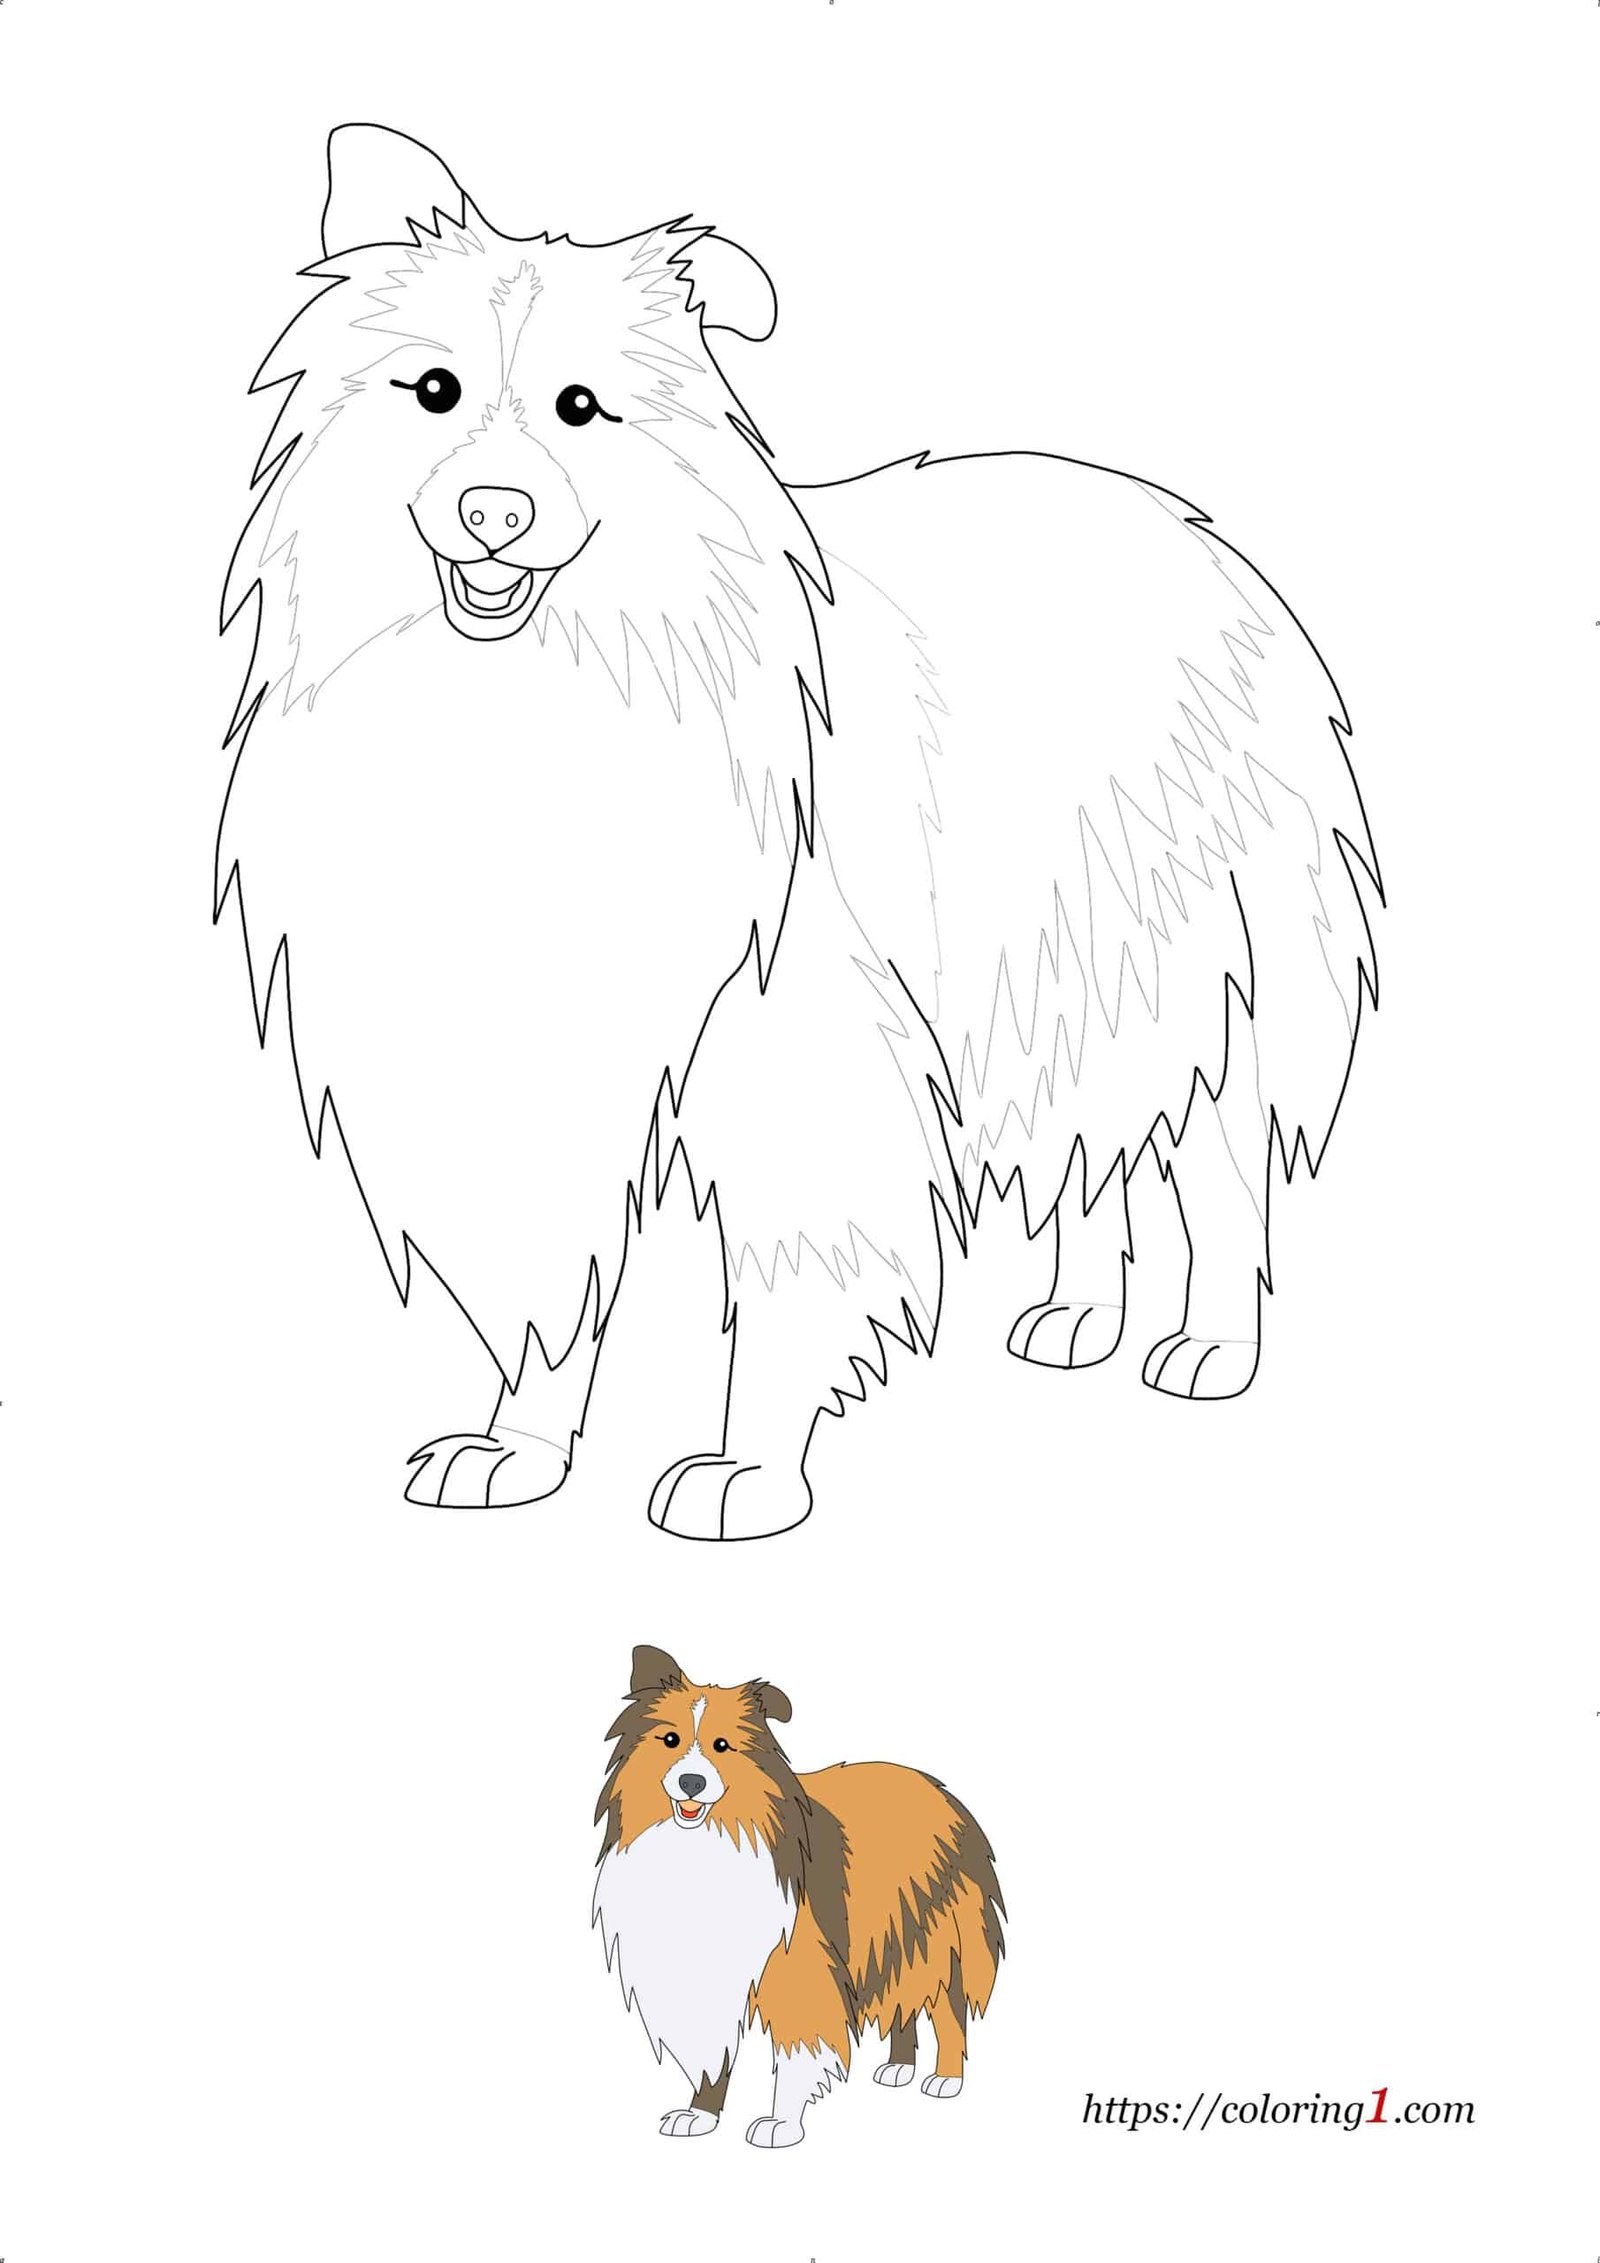 Realistic Dog Shetland Sheepdog Breed coloring page pdf